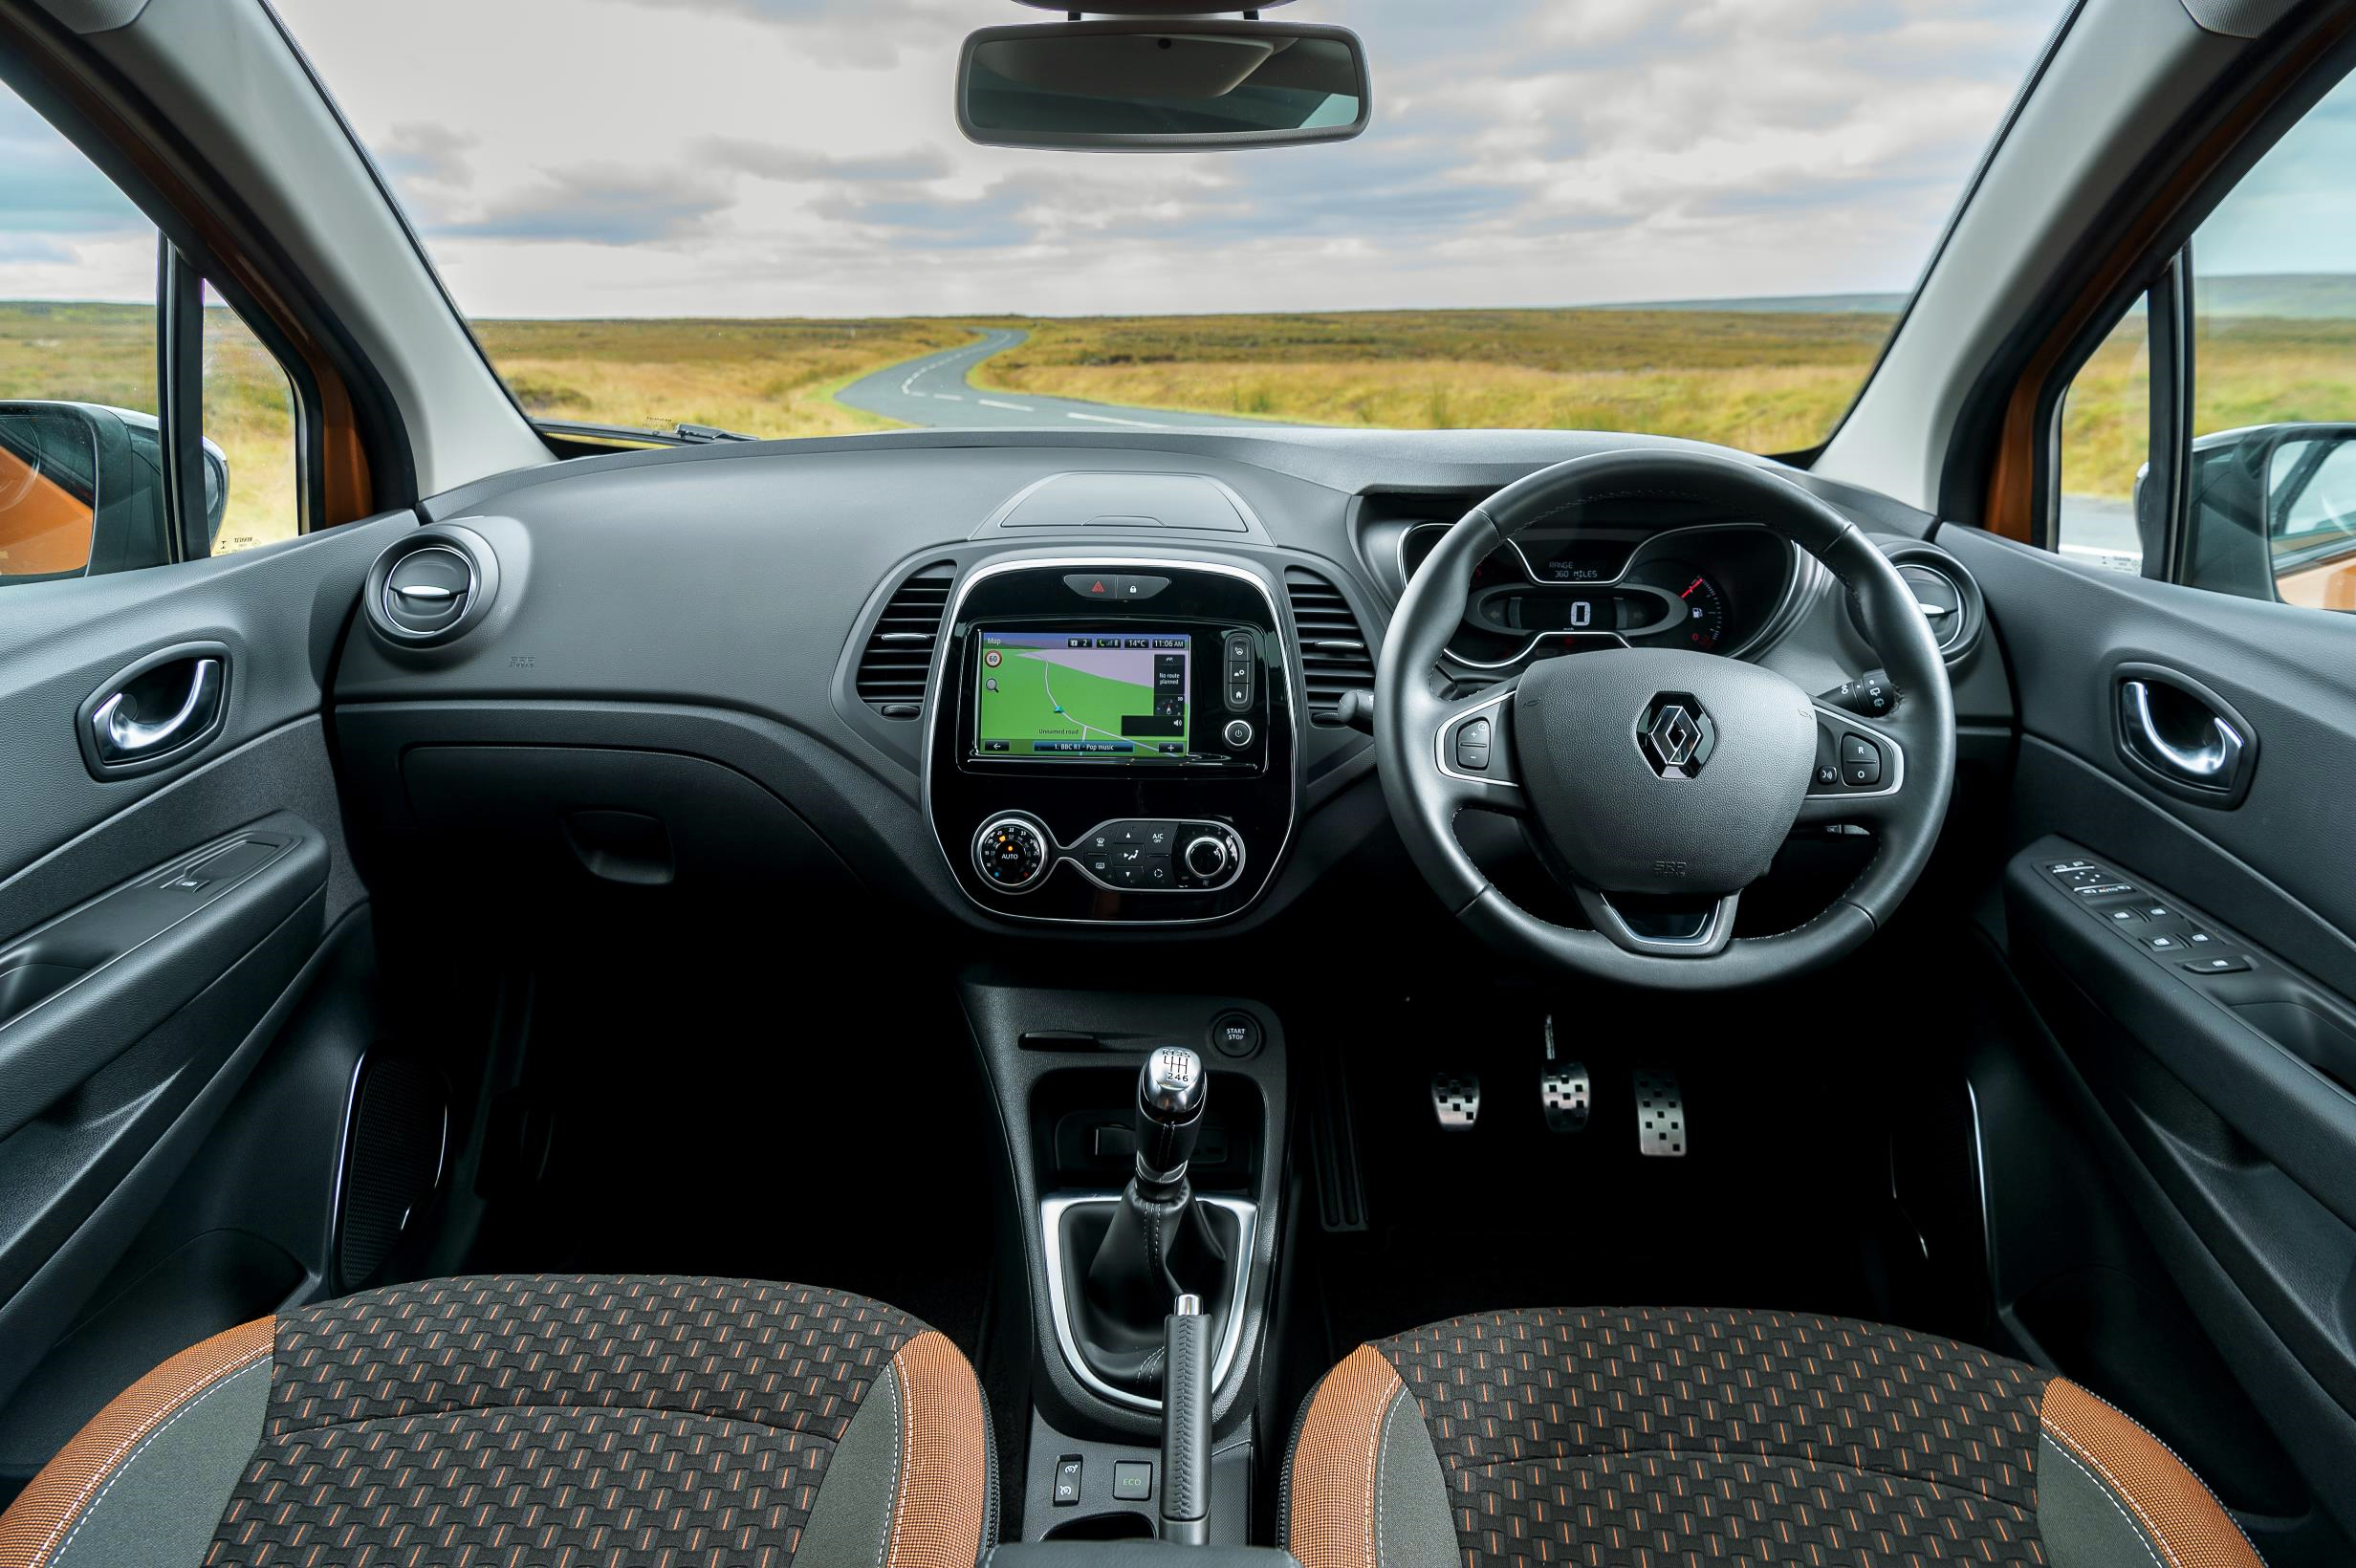 Renault Capture interior image .jpg (1.37 MB)